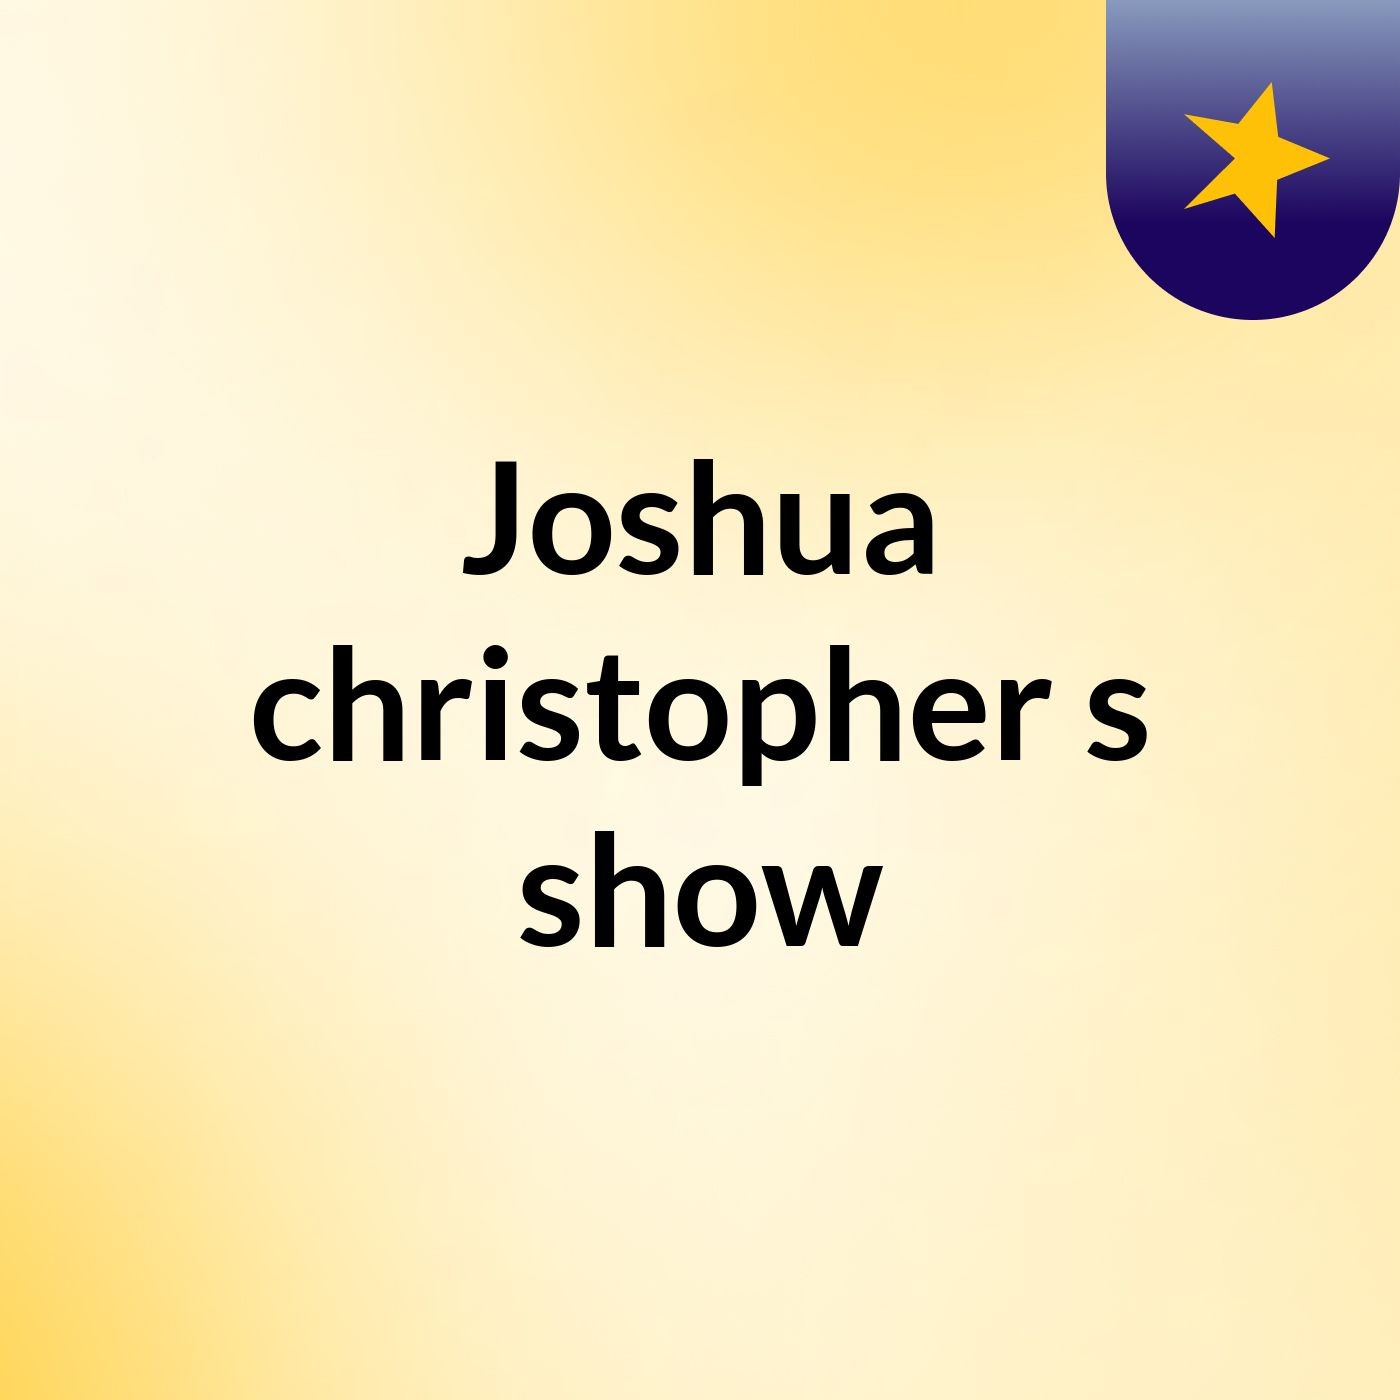 Joshua christopher's show